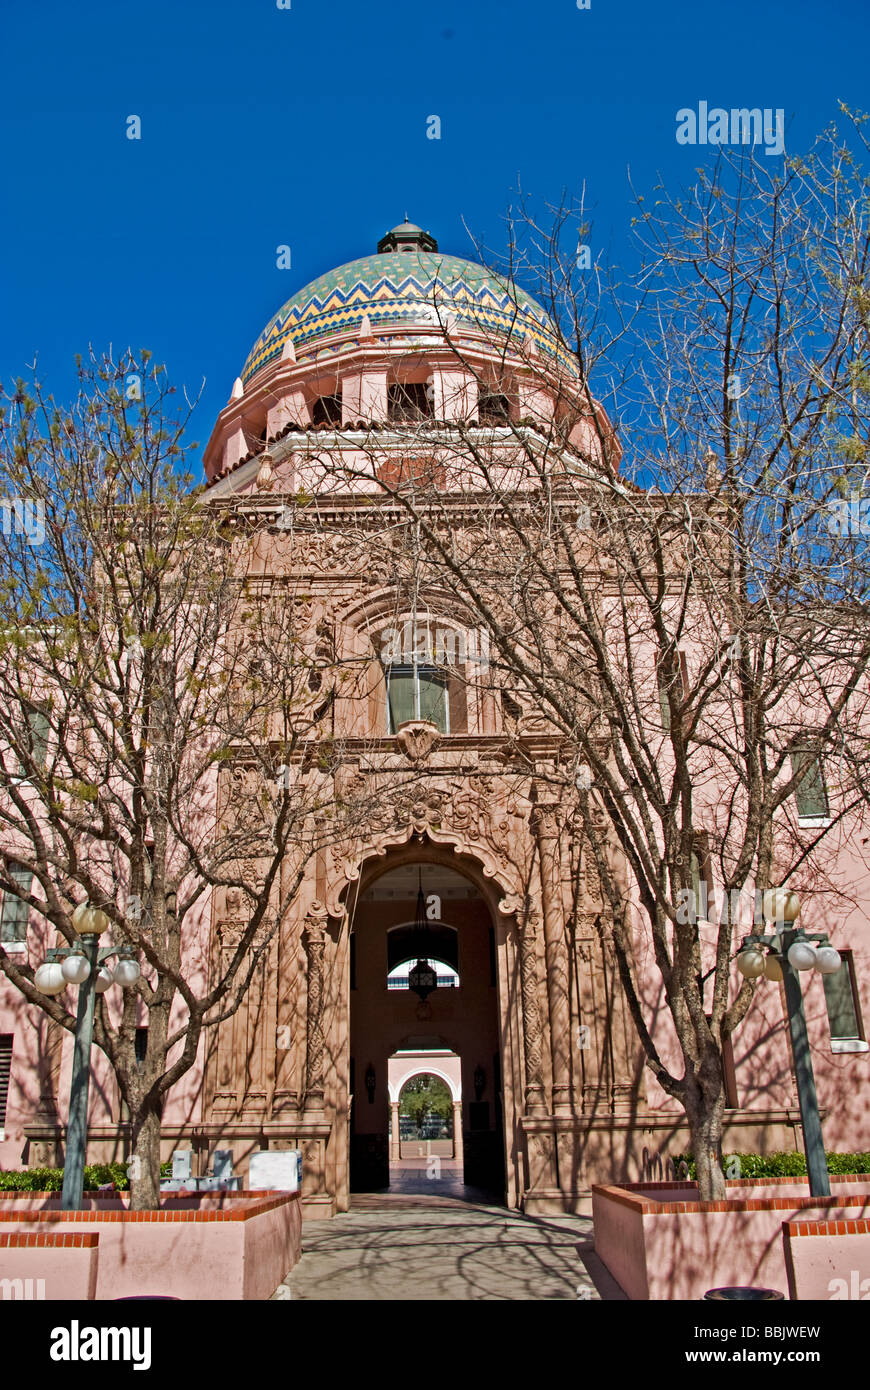 USA Arizona Tucson Pima County Courthouse Spanish colonial Moorish mosaic tile dome Stock Photo